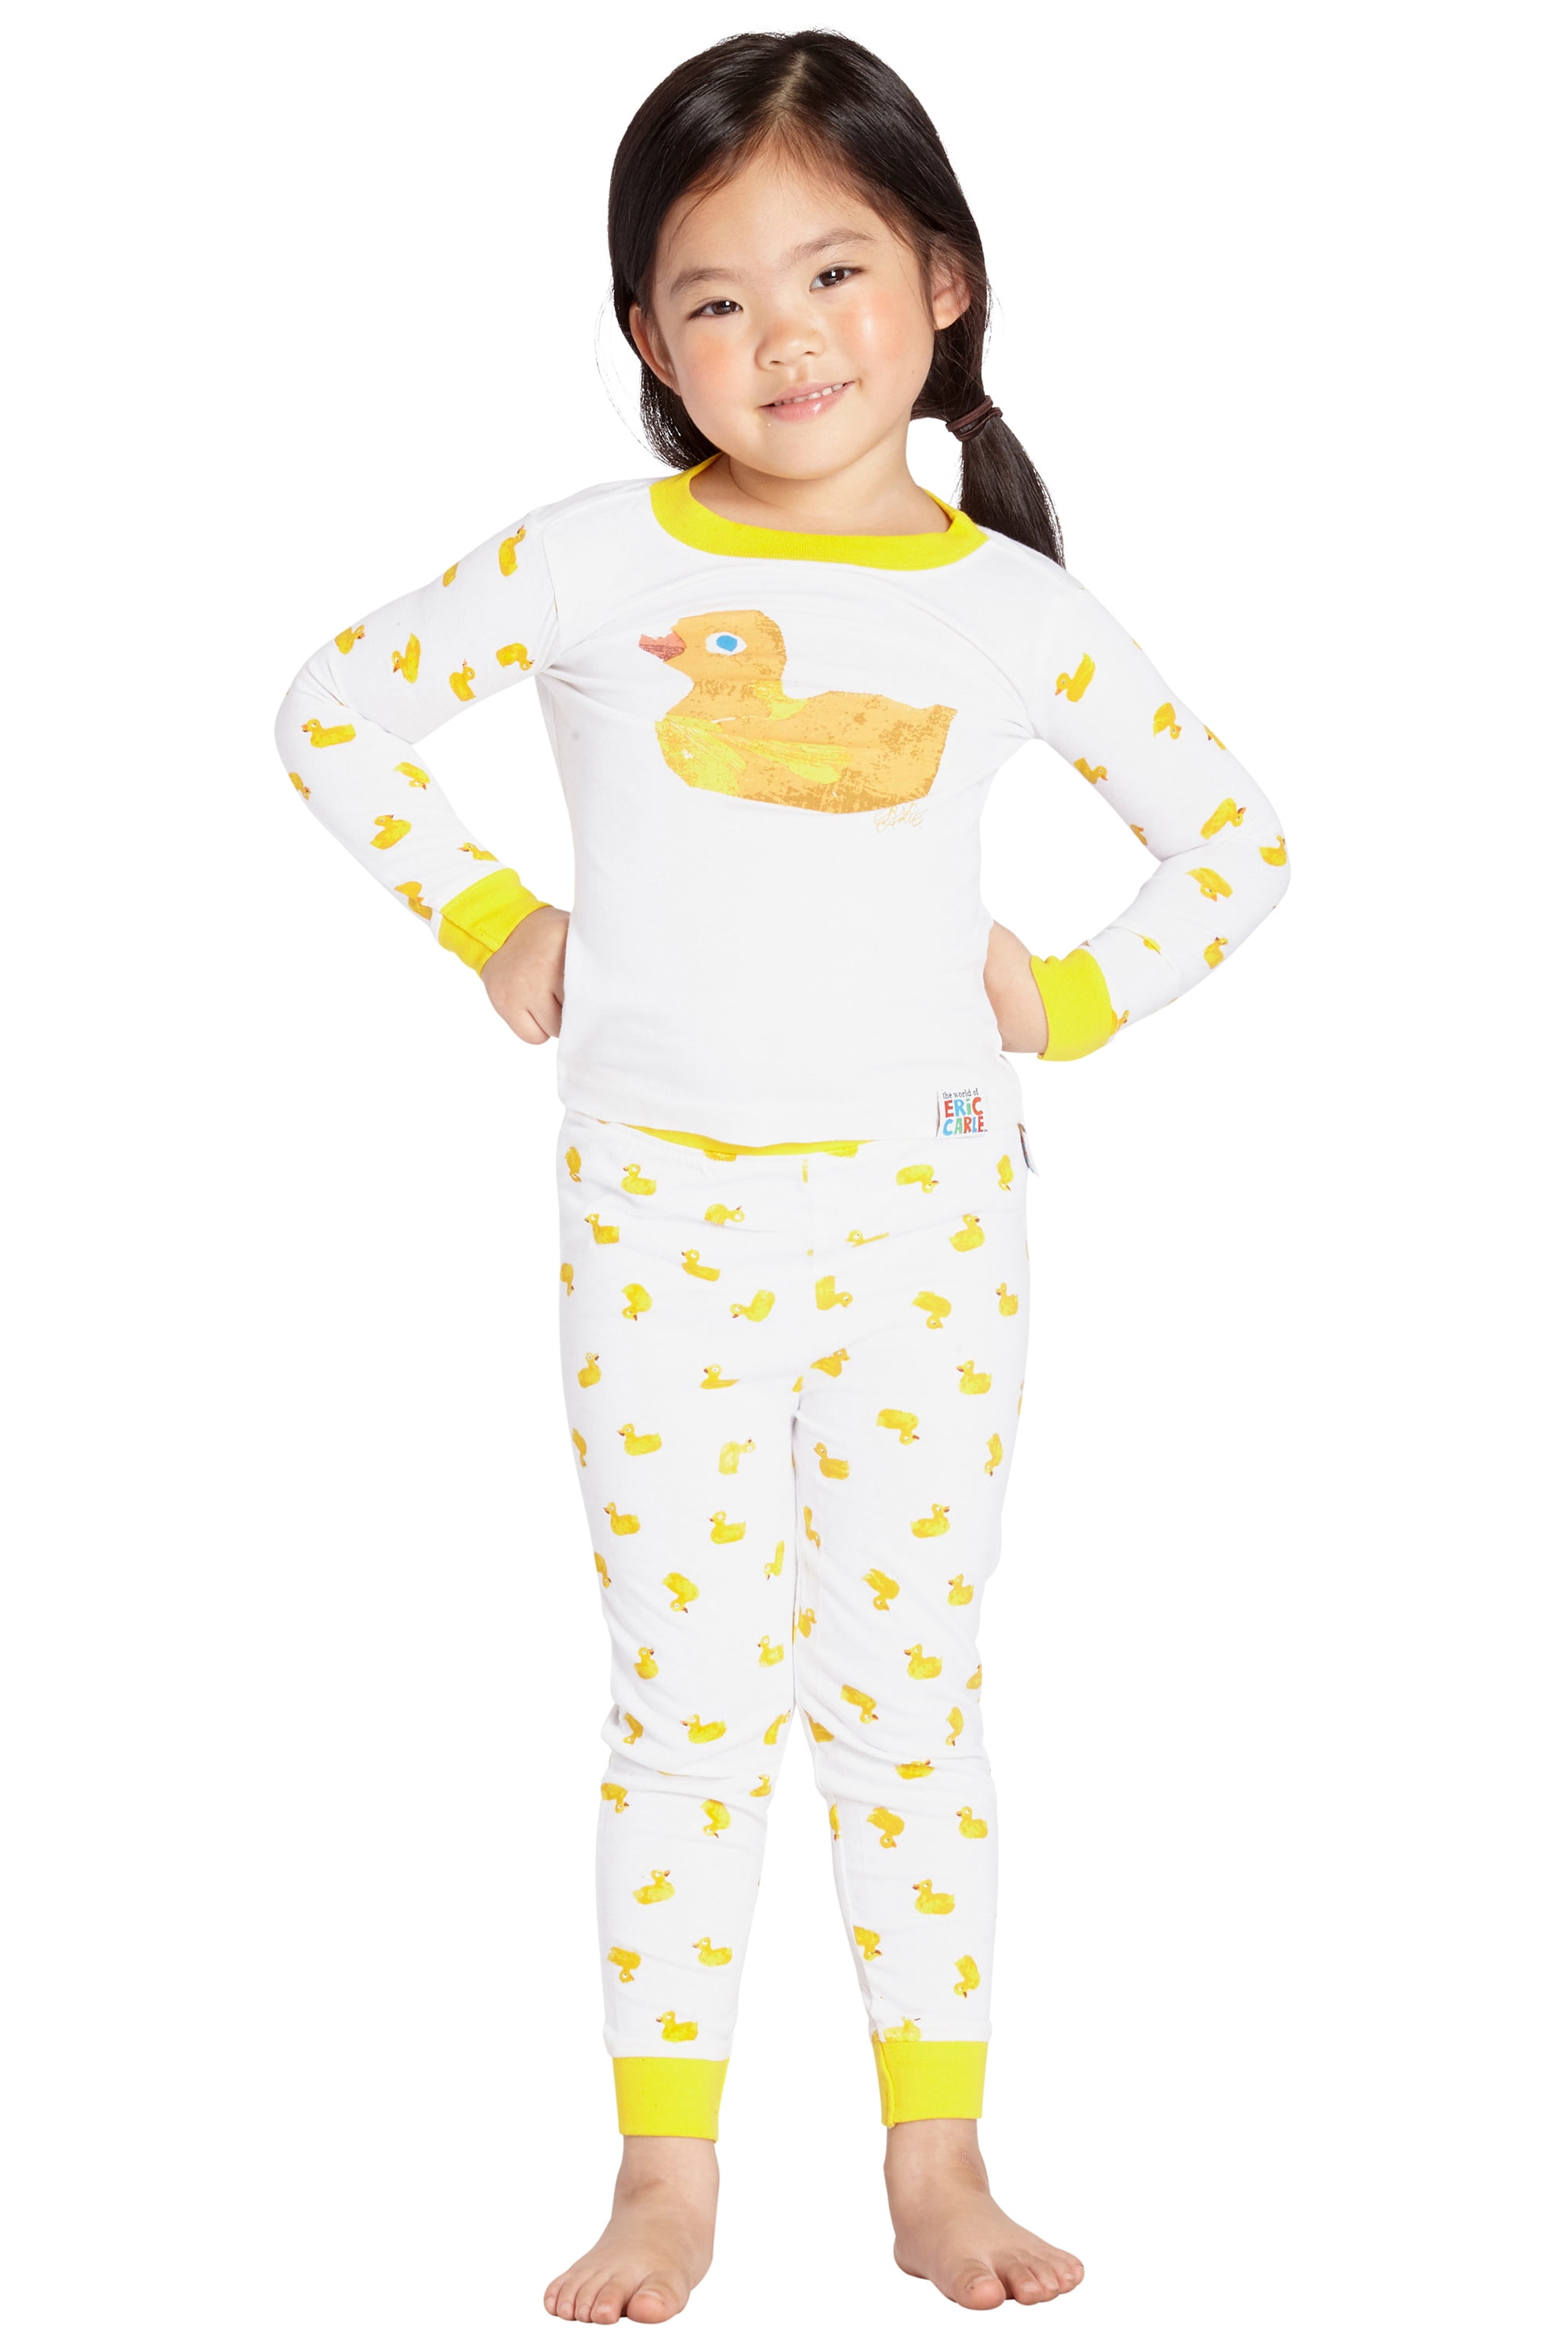 Crew Kids Crew Lounge Pink Checkered Fleece Grandpa Pajamas AL2688, Size 3X | Pajama Set | Macaroni Kids